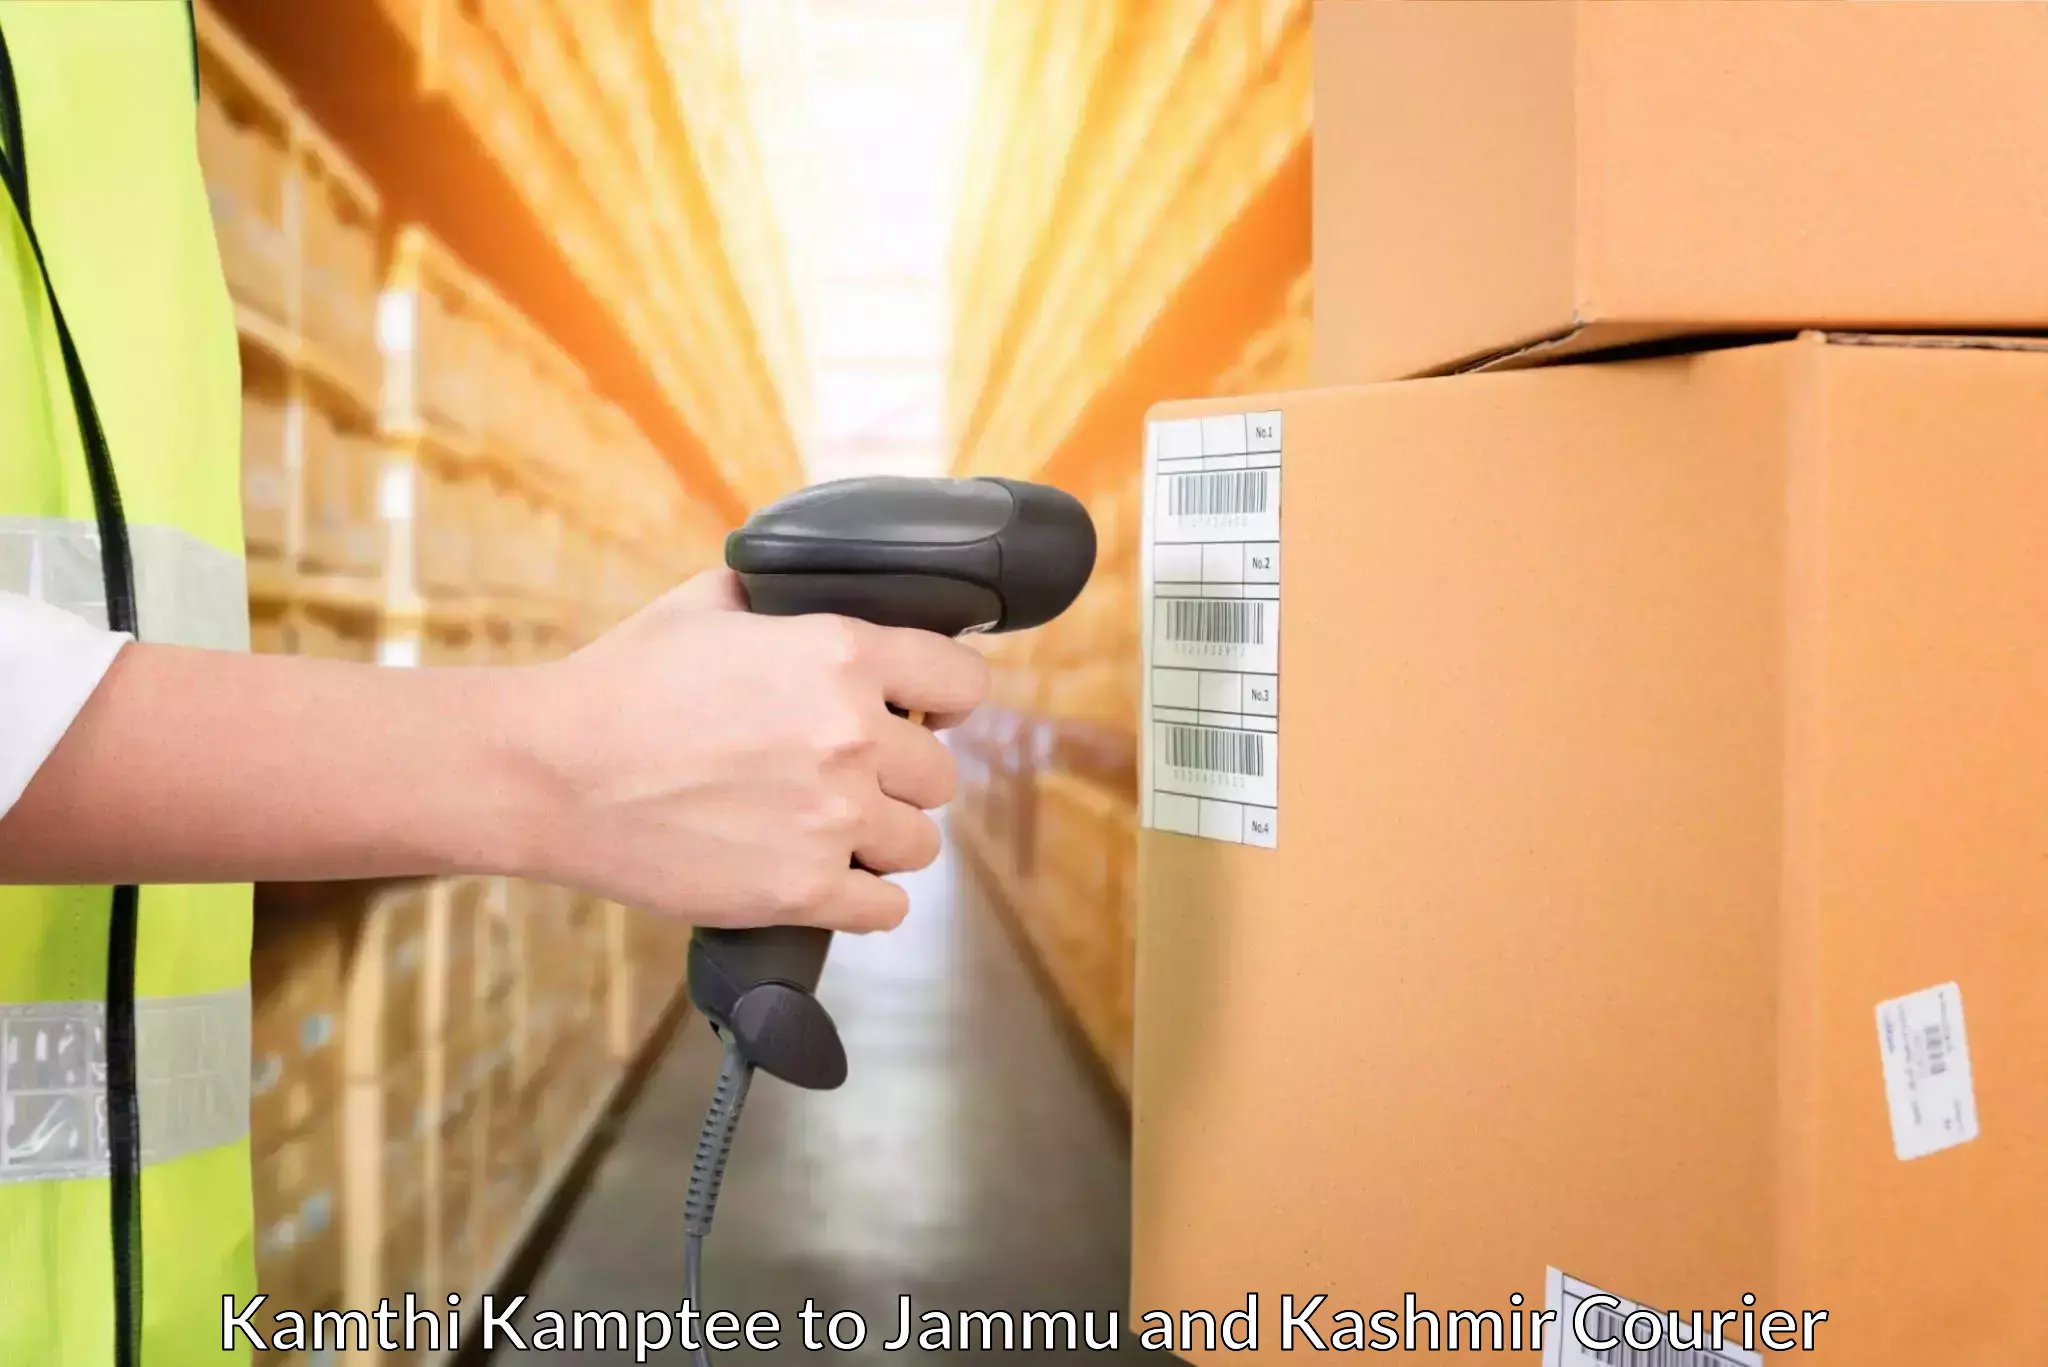 Courier service partnerships Kamthi Kamptee to Jammu and Kashmir